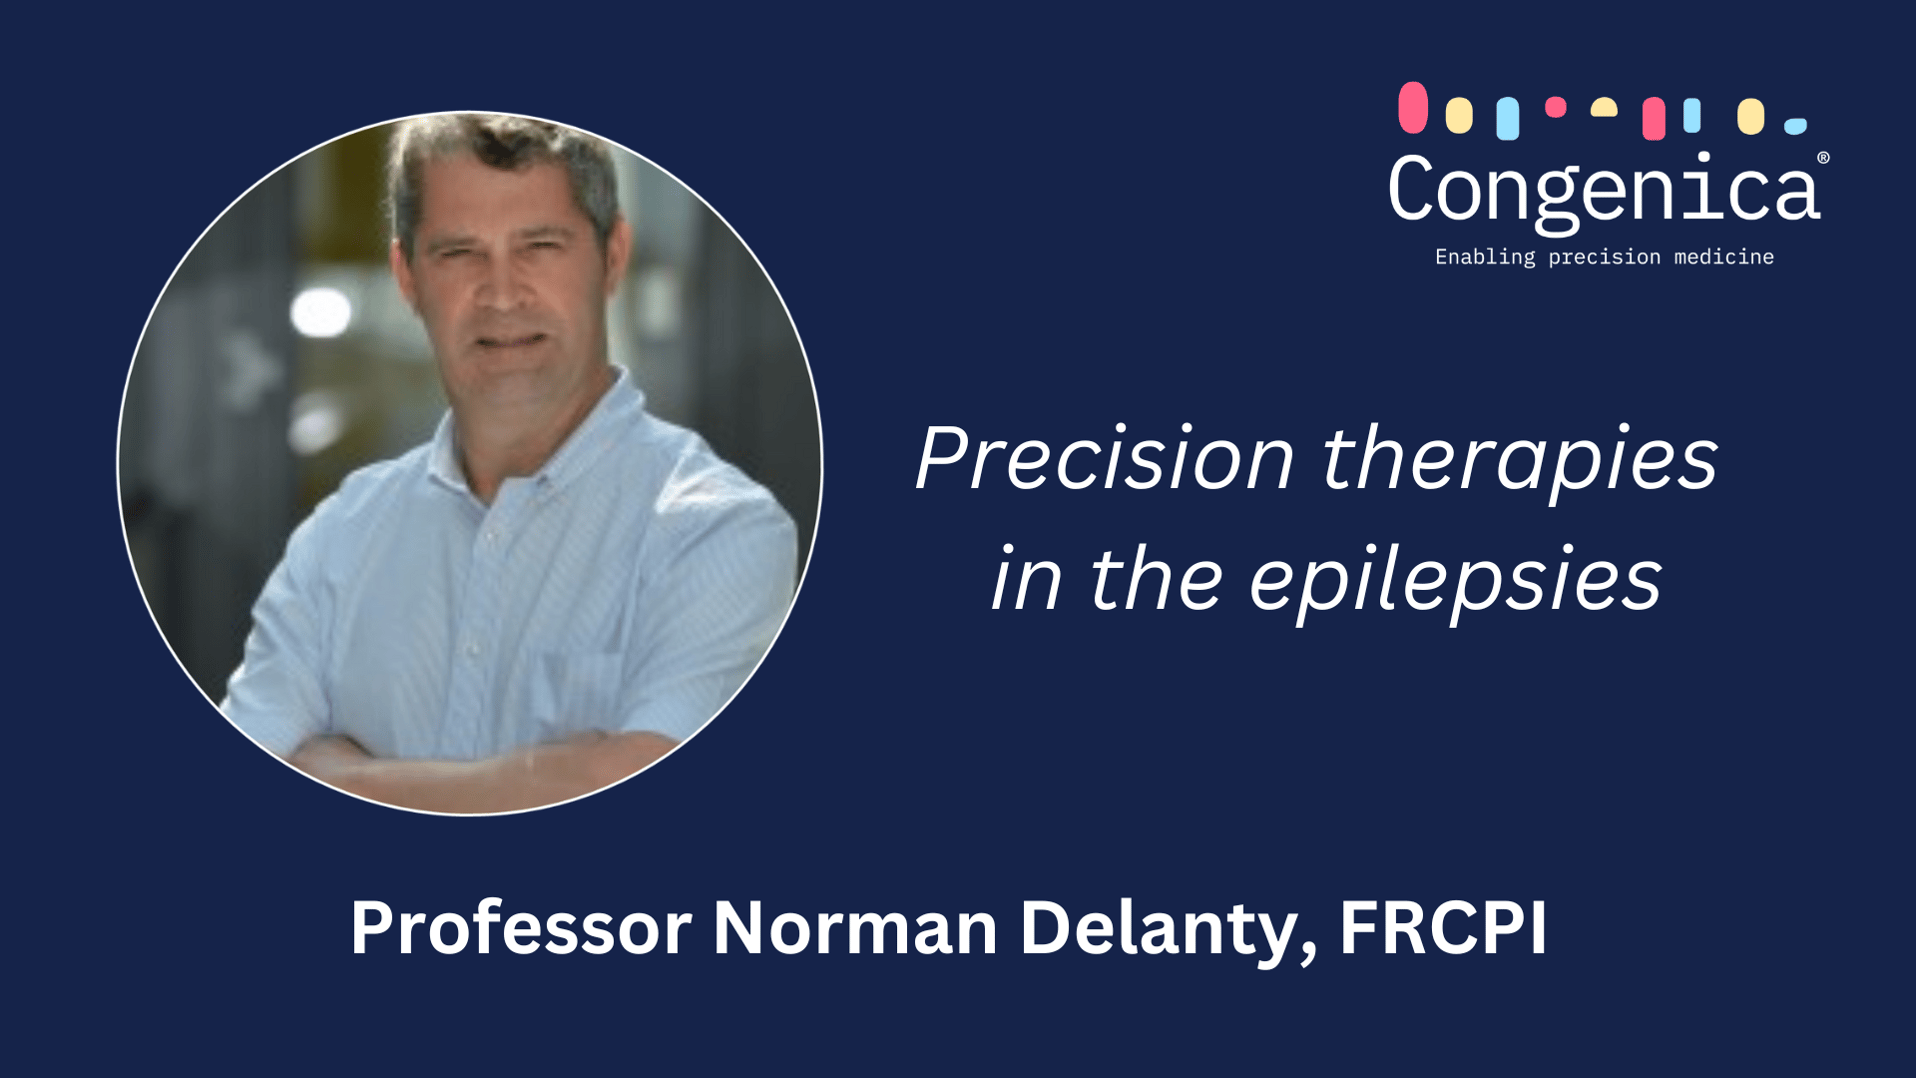 Professor Norman Delanty, FRCPI Precision therapies in the epilepsies.